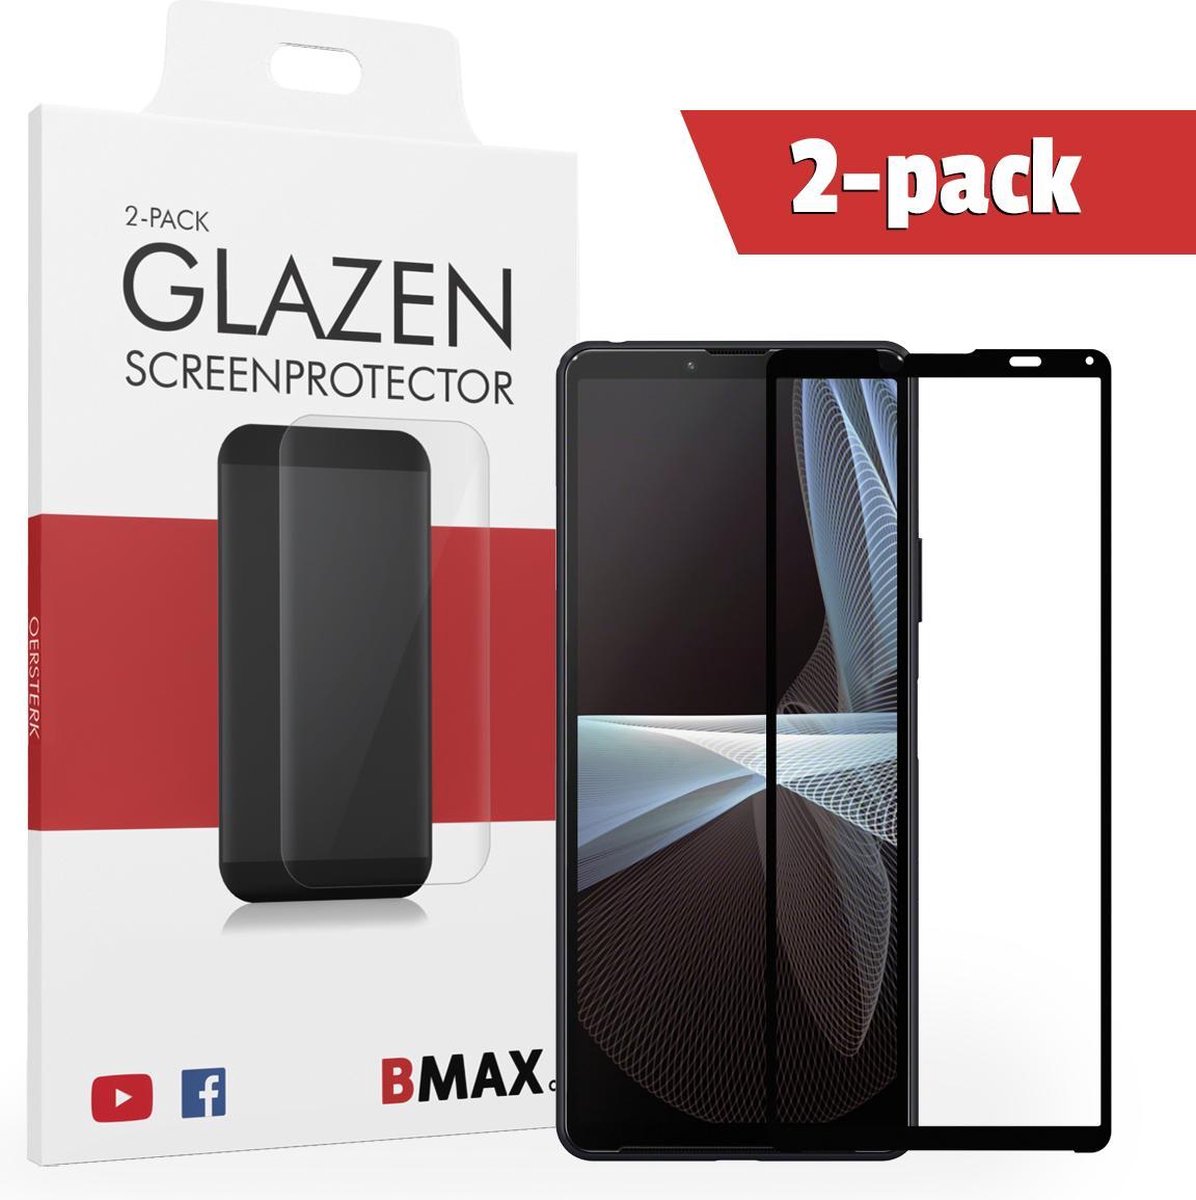 2-pack Bmax Sony Xperia 10 Iii Screenprotector - Glass - Full Cover 2.5d - Black